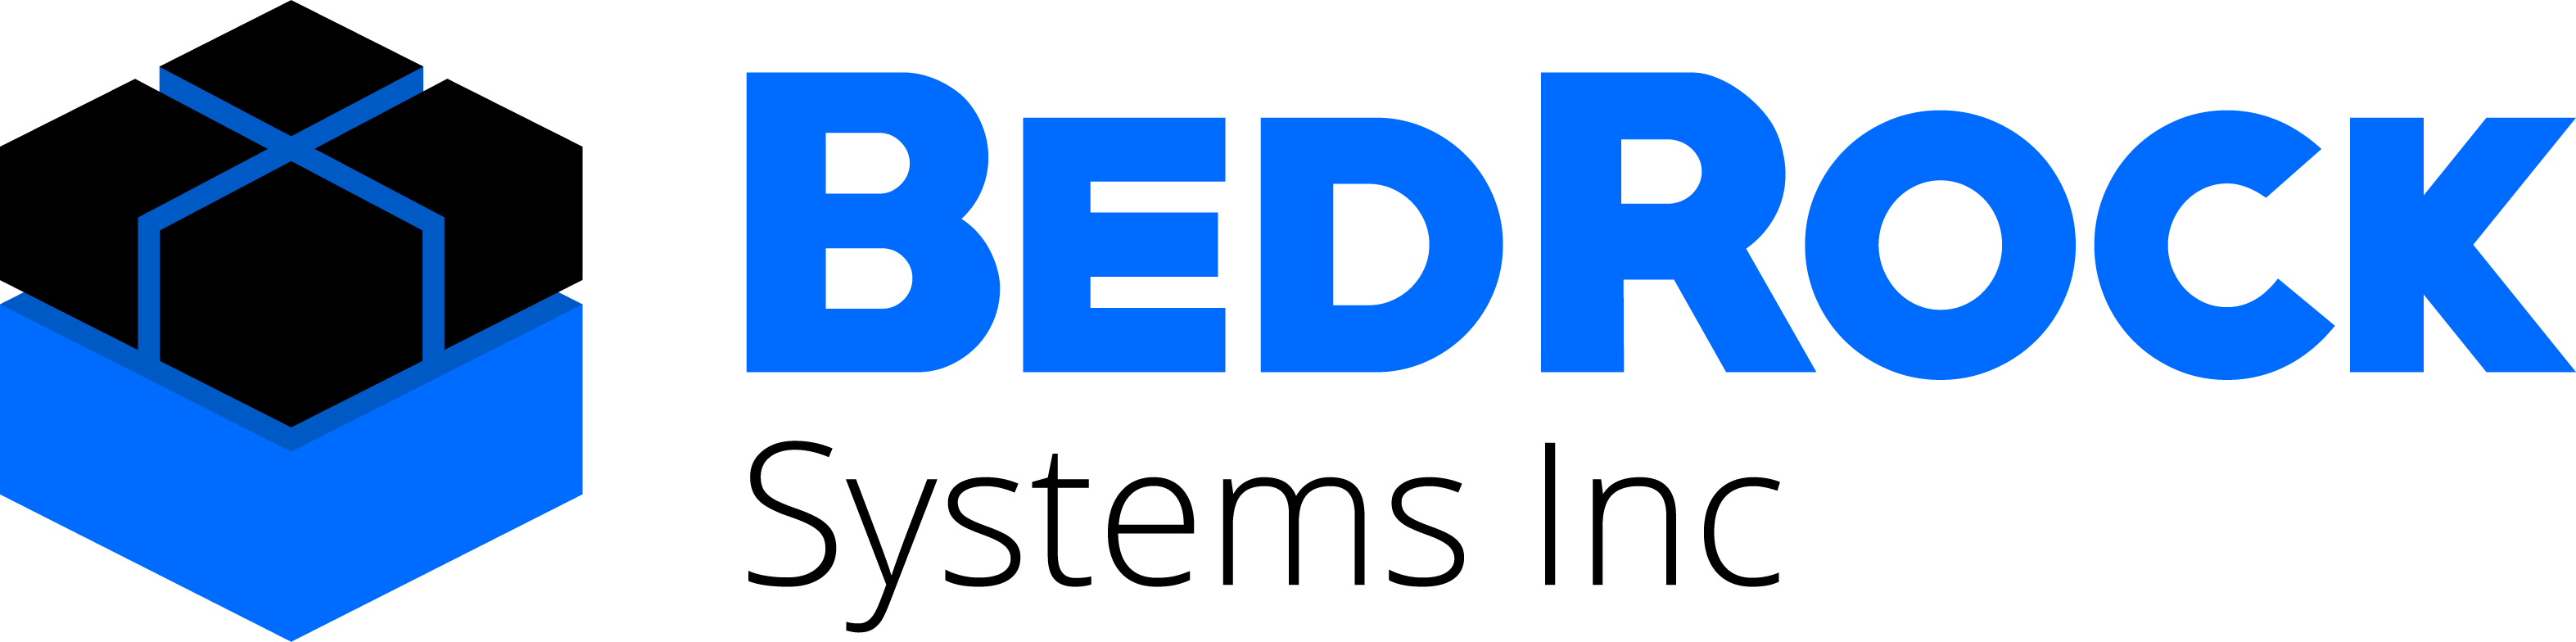 bedrock-logo-full-color-rgb (1)-2